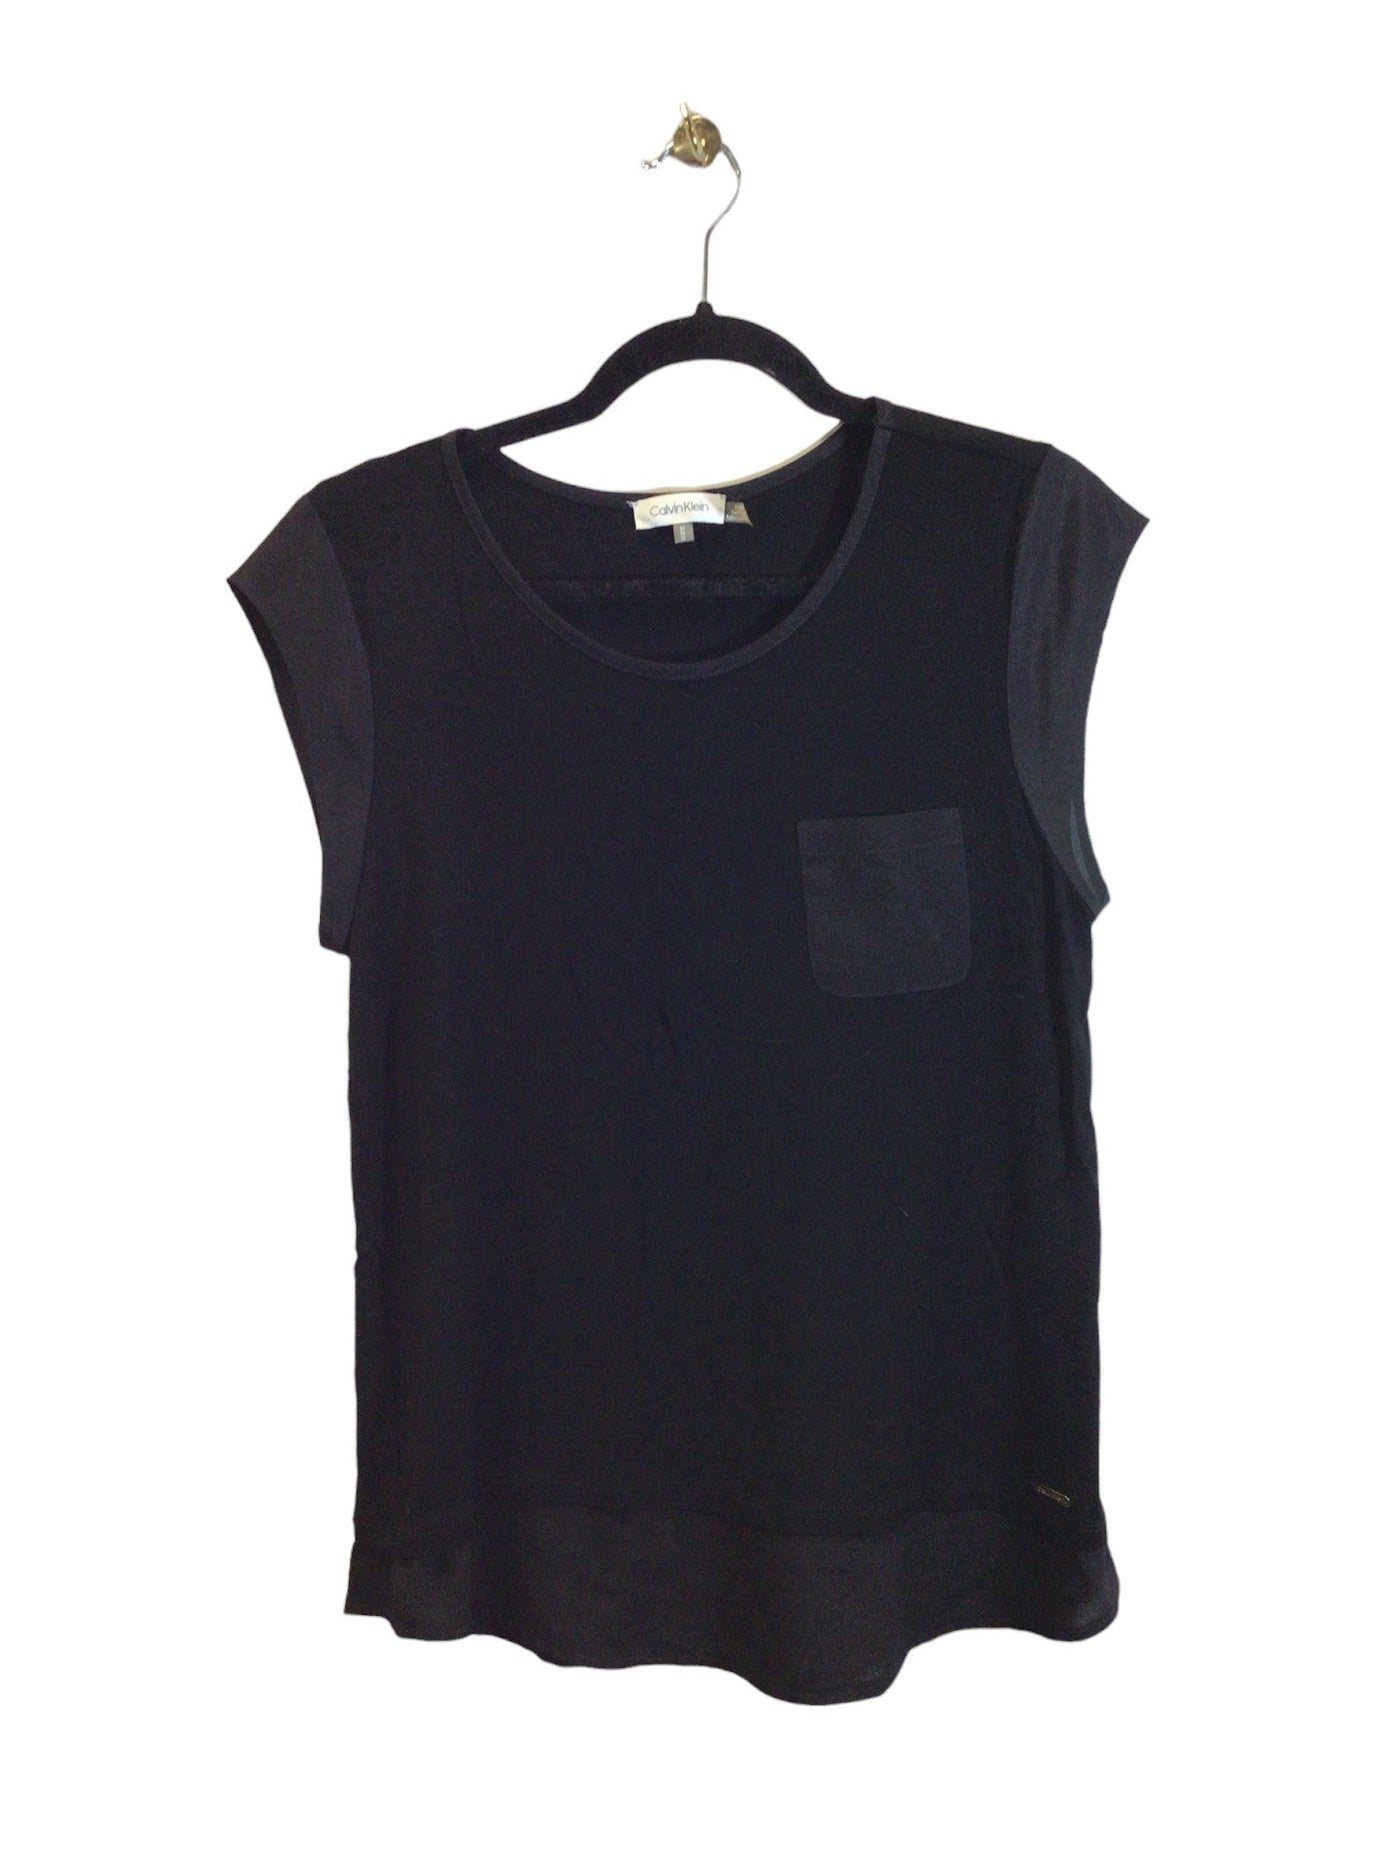 CALVIN KLEIN Women T-Shirts Regular fit in Black - Size M | 21.5 $ KOOP